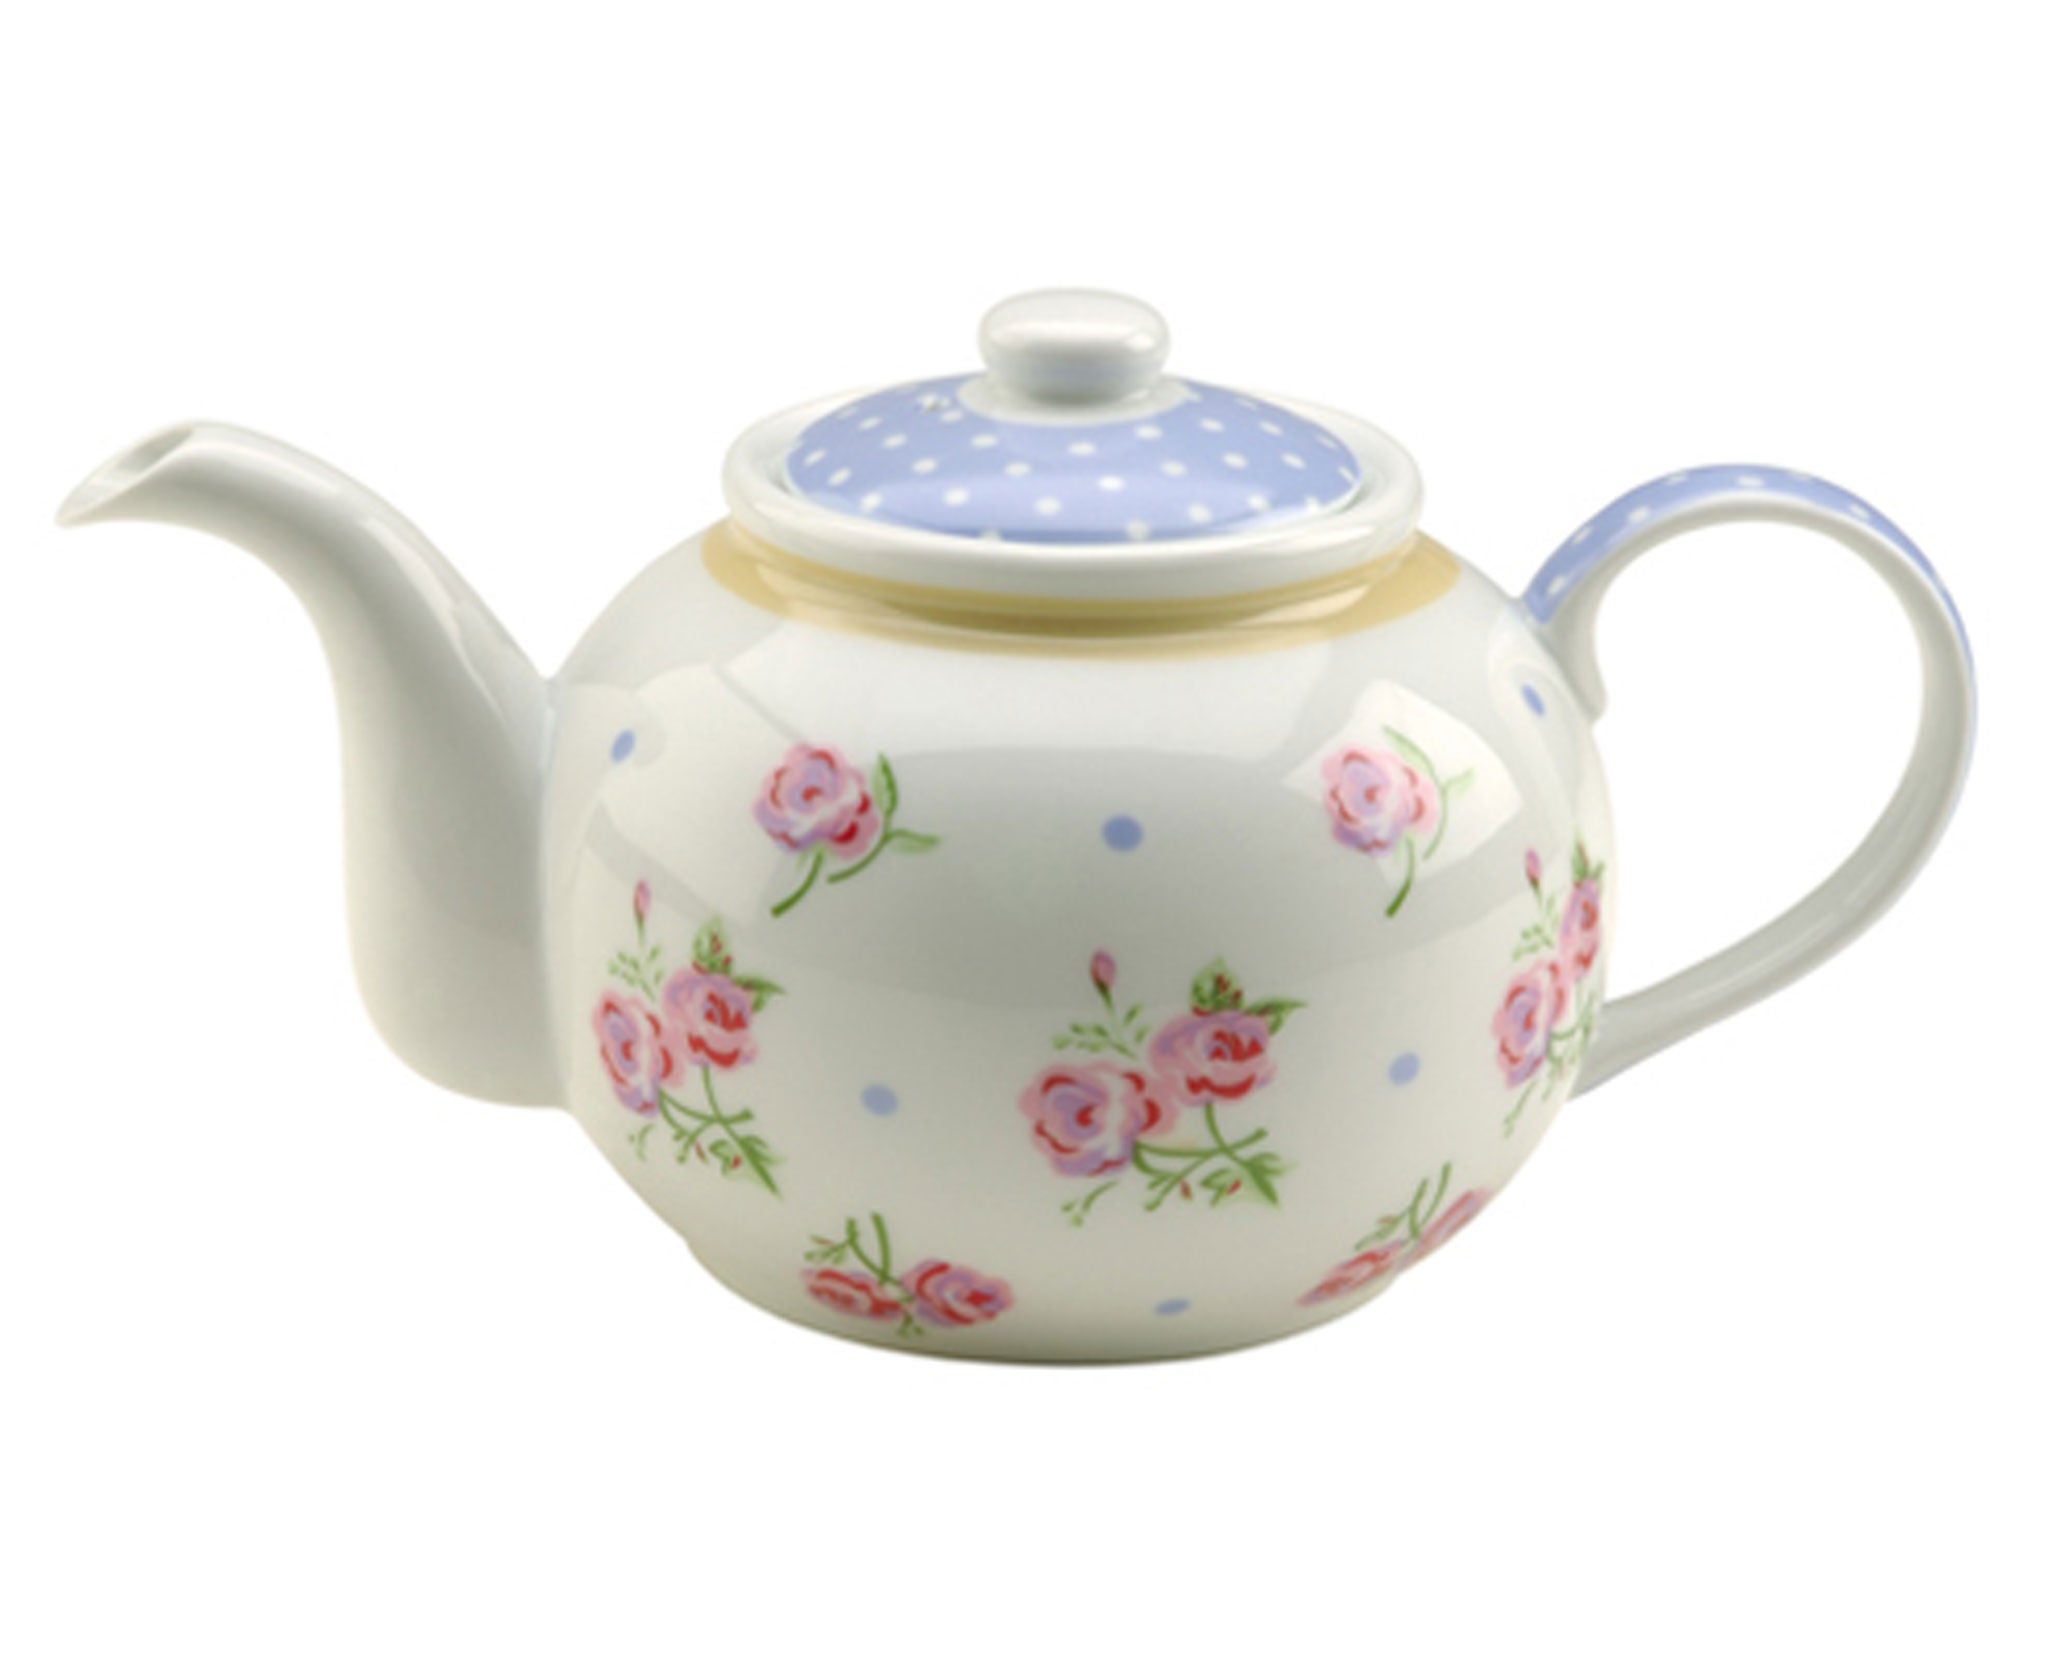 'Potpourri': A teapot that doesn't drip